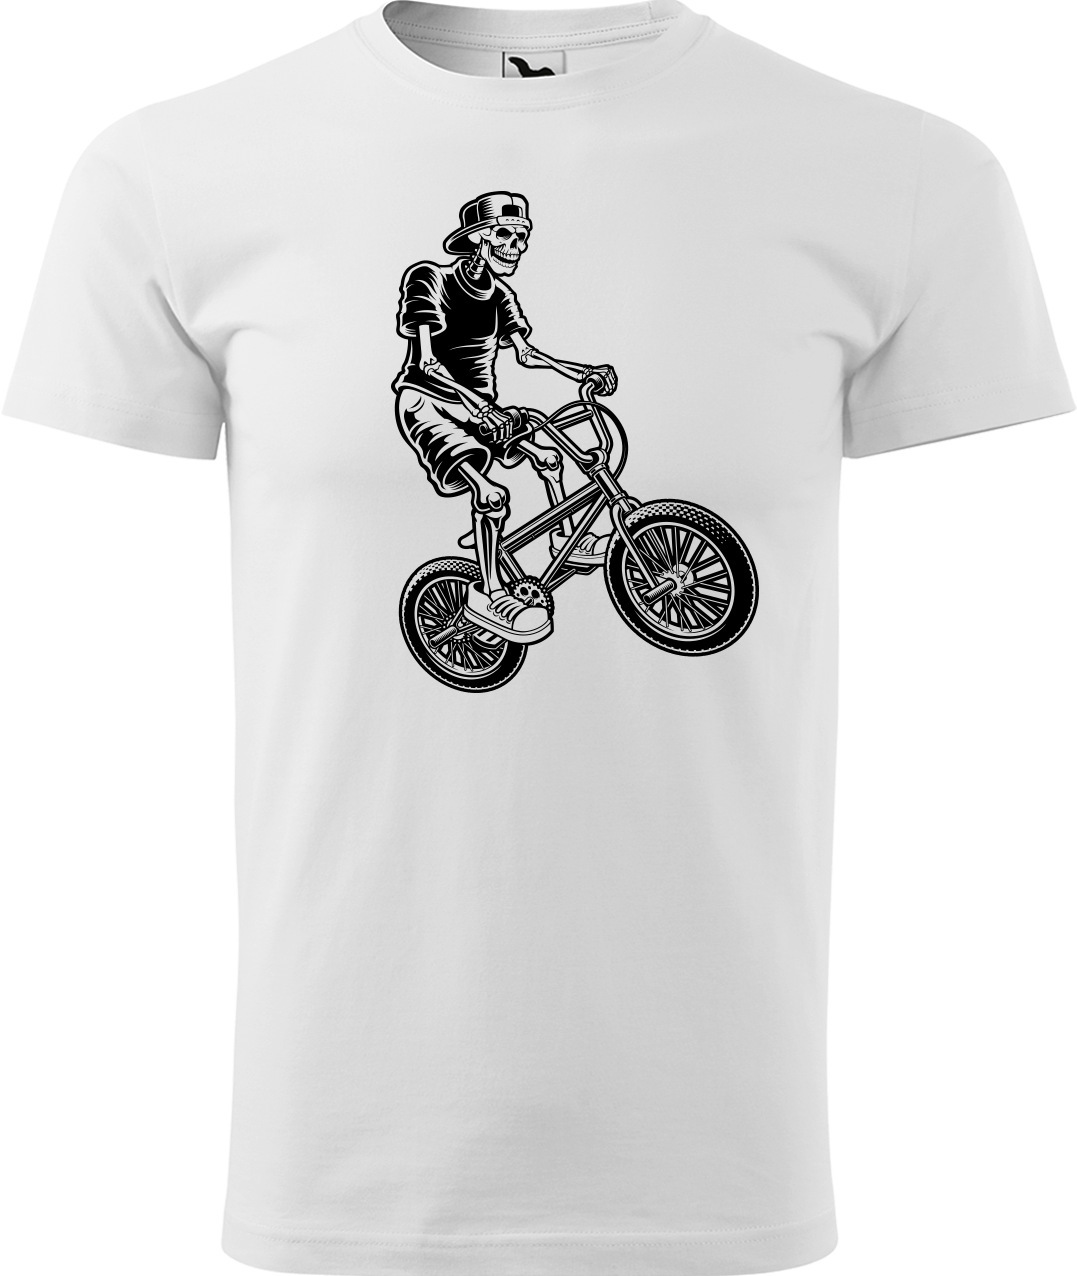 Pánské tričko s kolem - Trial Bike Velikost: S, Barva: Bílá (00)